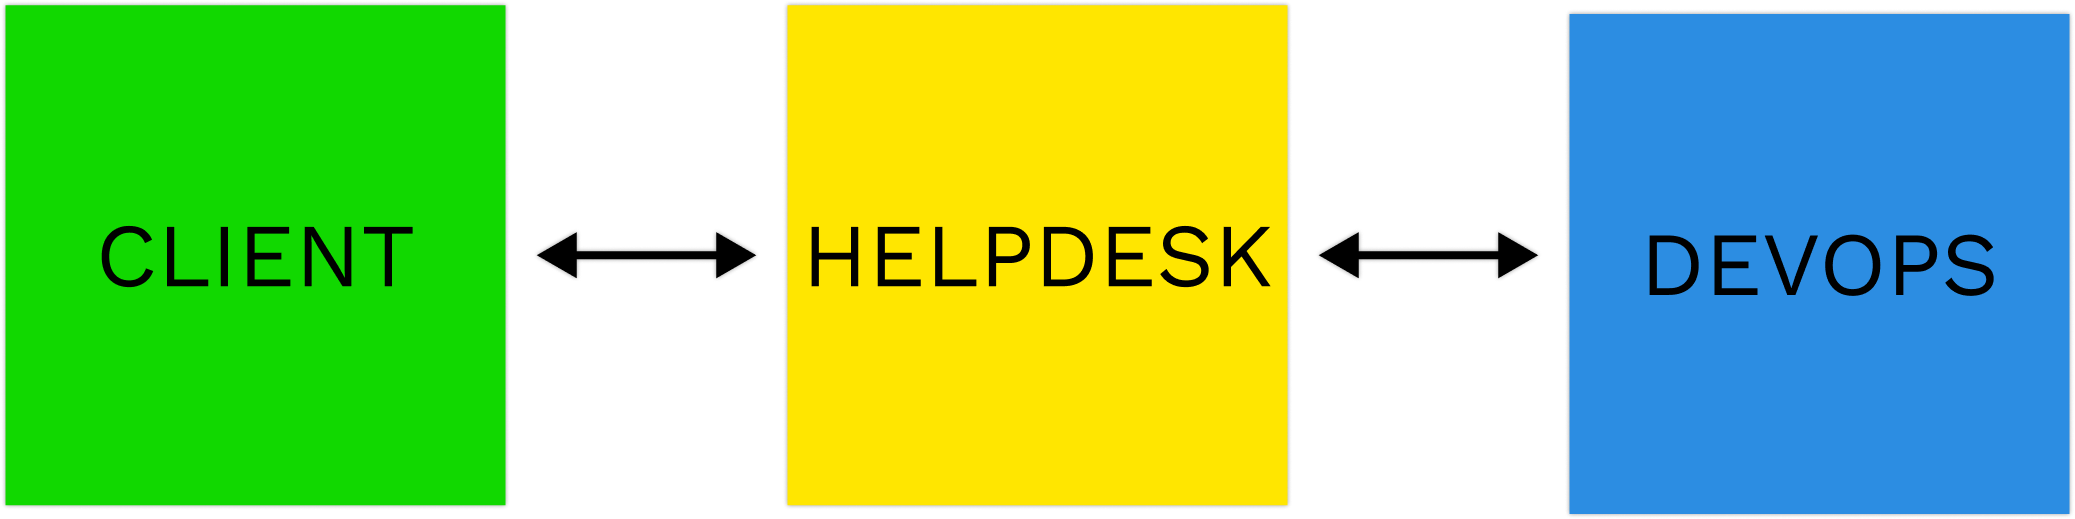 Helpdesk communication